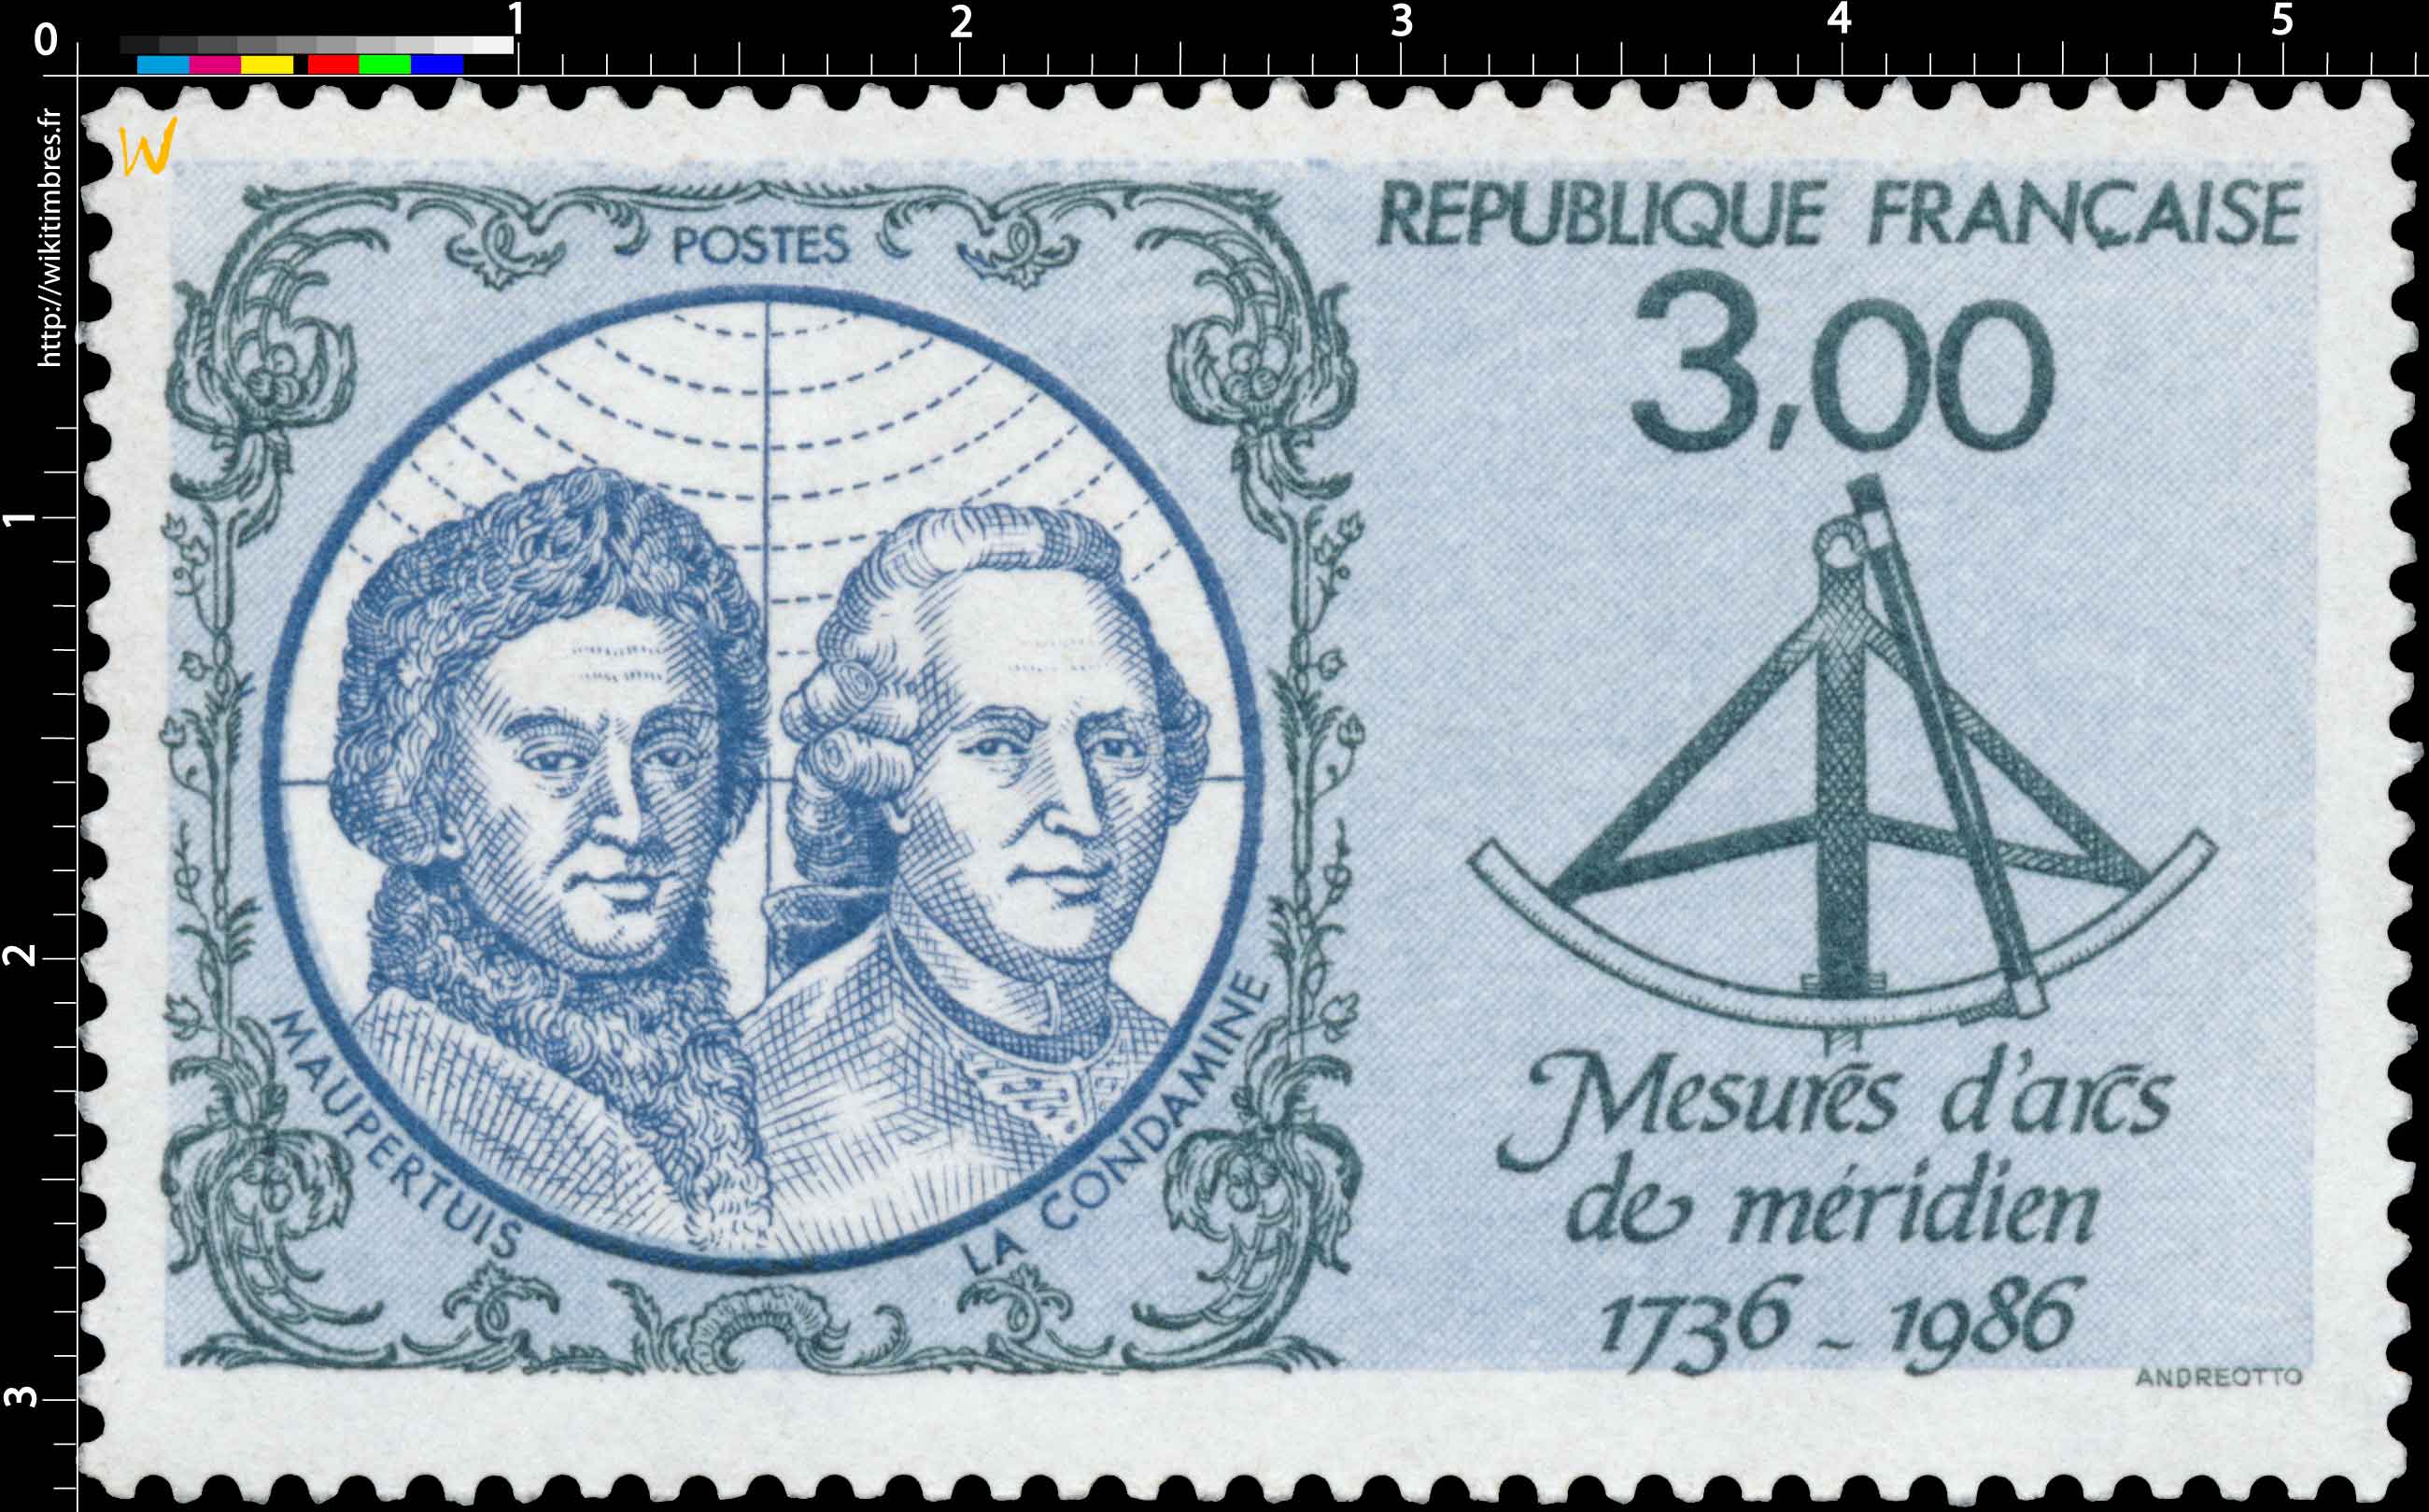 Mesures d'arcs de méridien 1736-1986 MAUPERTUIS CONDAMINE